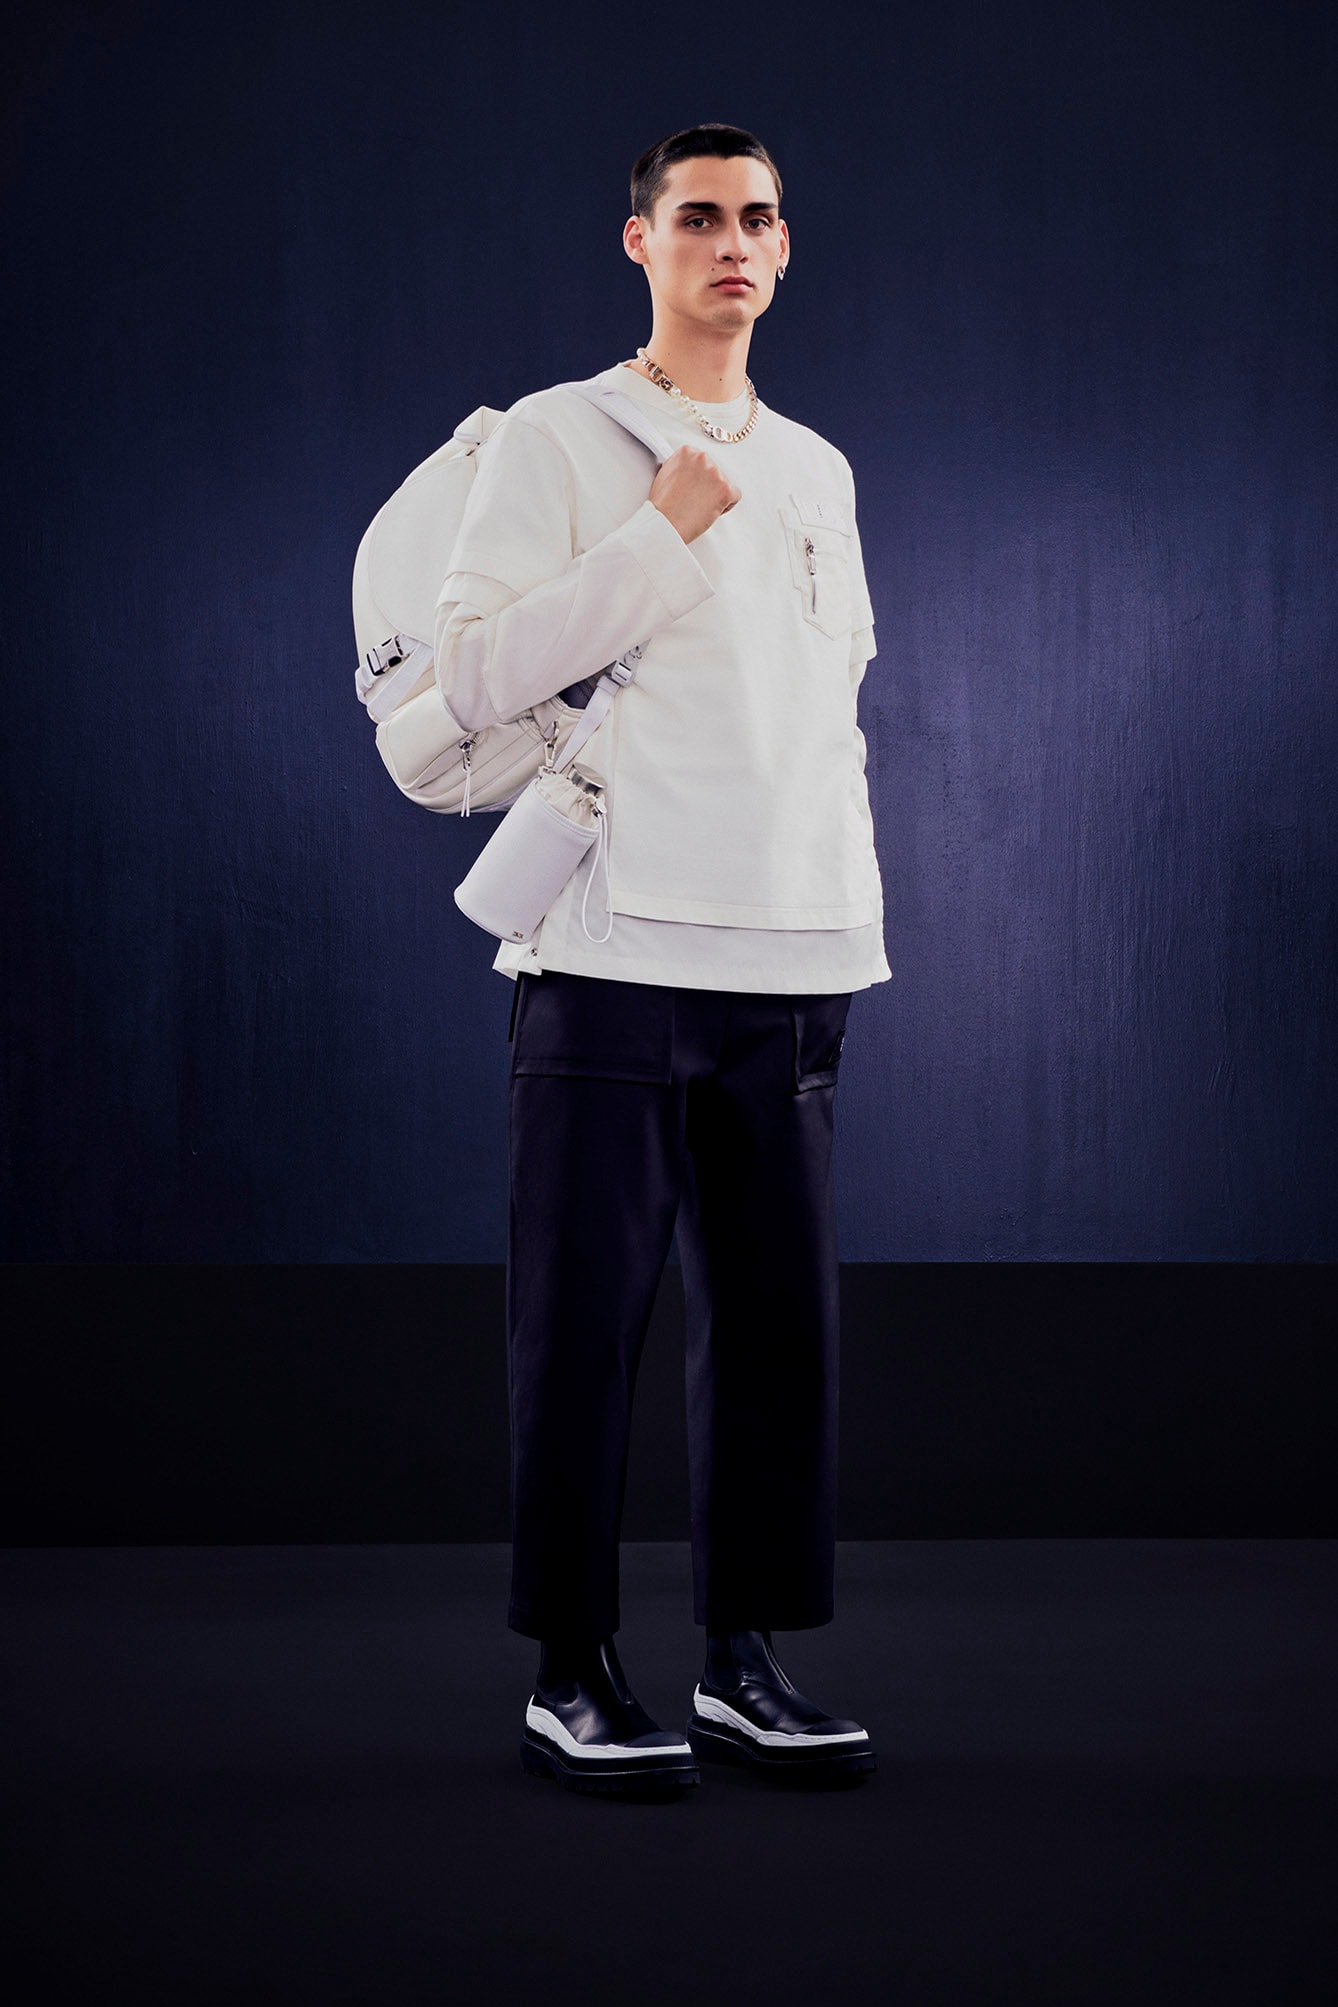 Dior x sacai Launches First Collaboration Kim Jones Chitose Abe Menswear Collection 2021